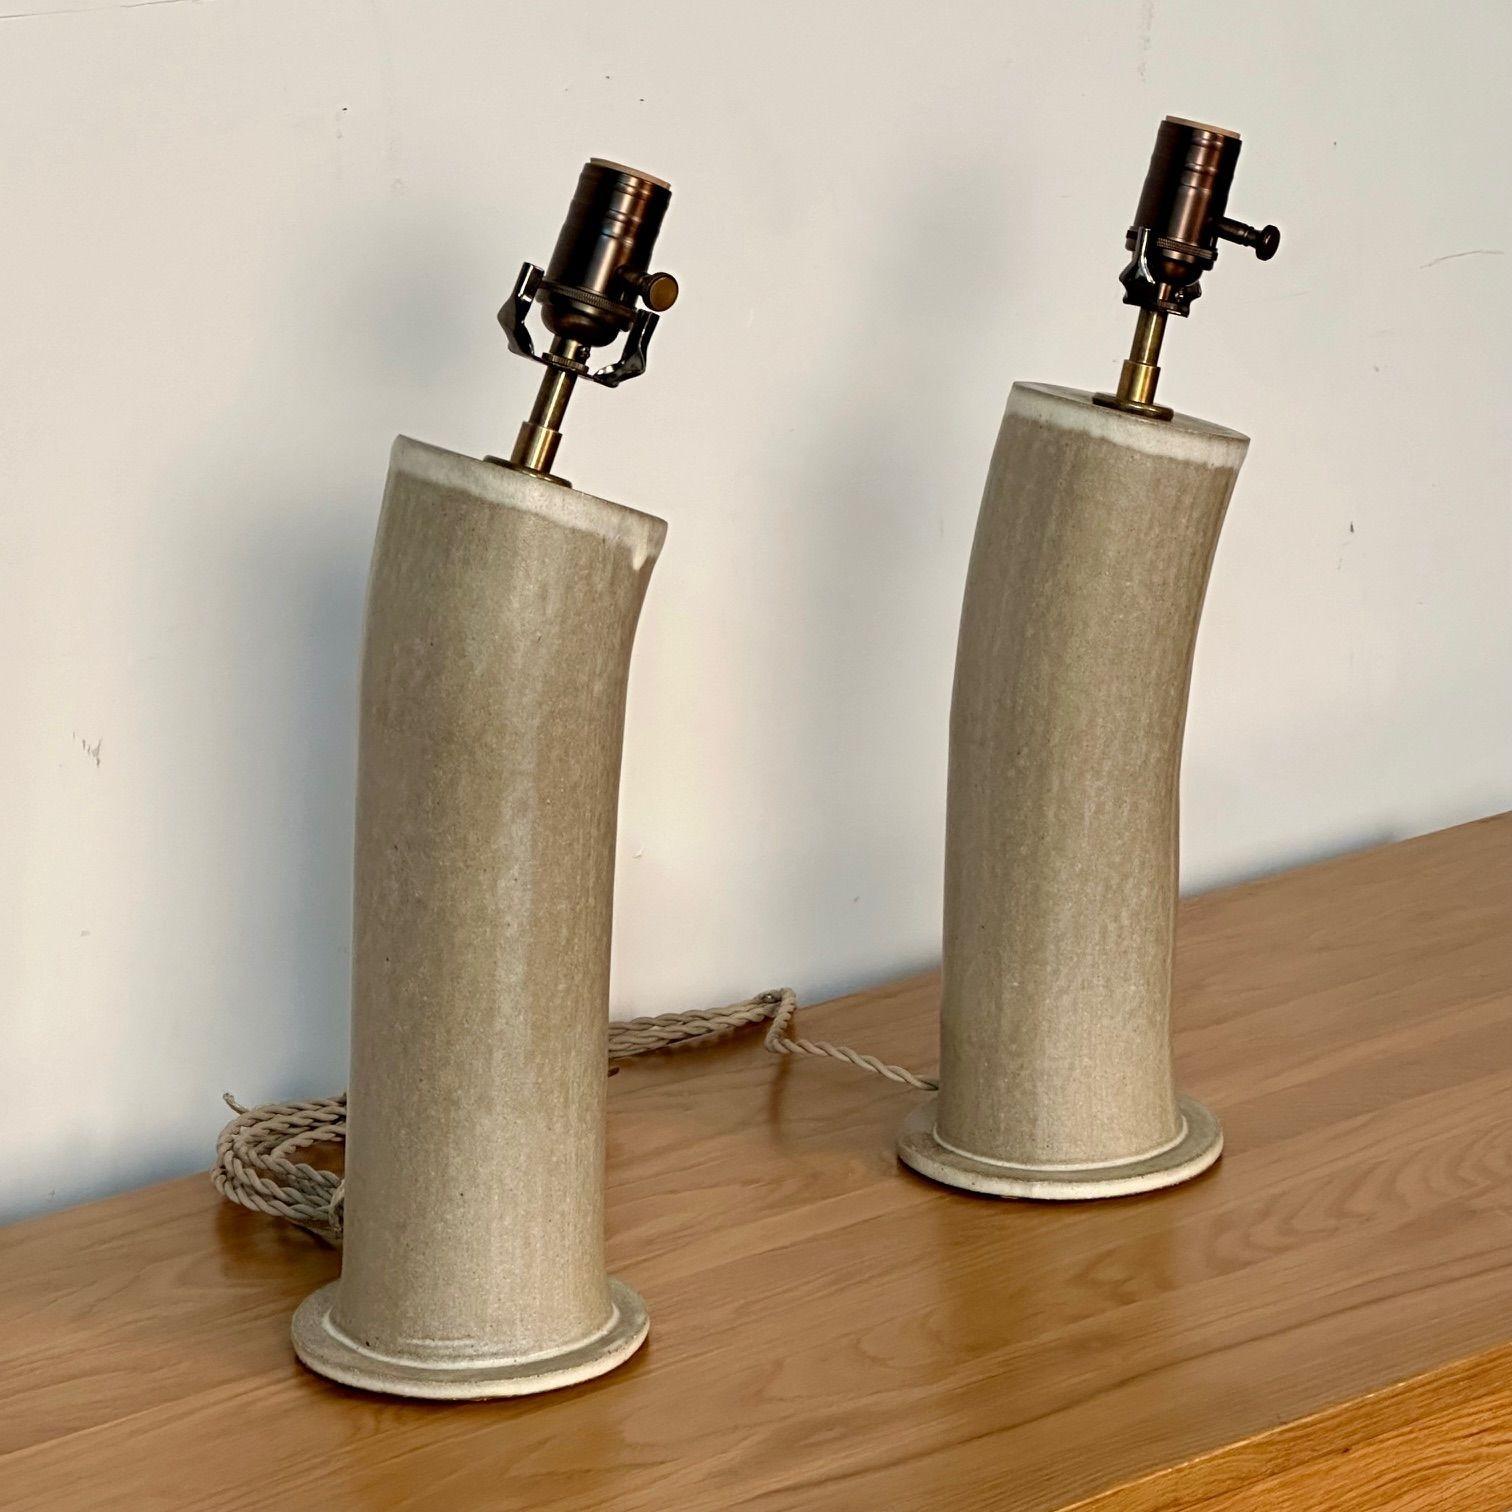 Dumais Made, Contemporary, Keramische Tischlampen, Beige Pergamentglasur, 2021 (Keramik) im Angebot